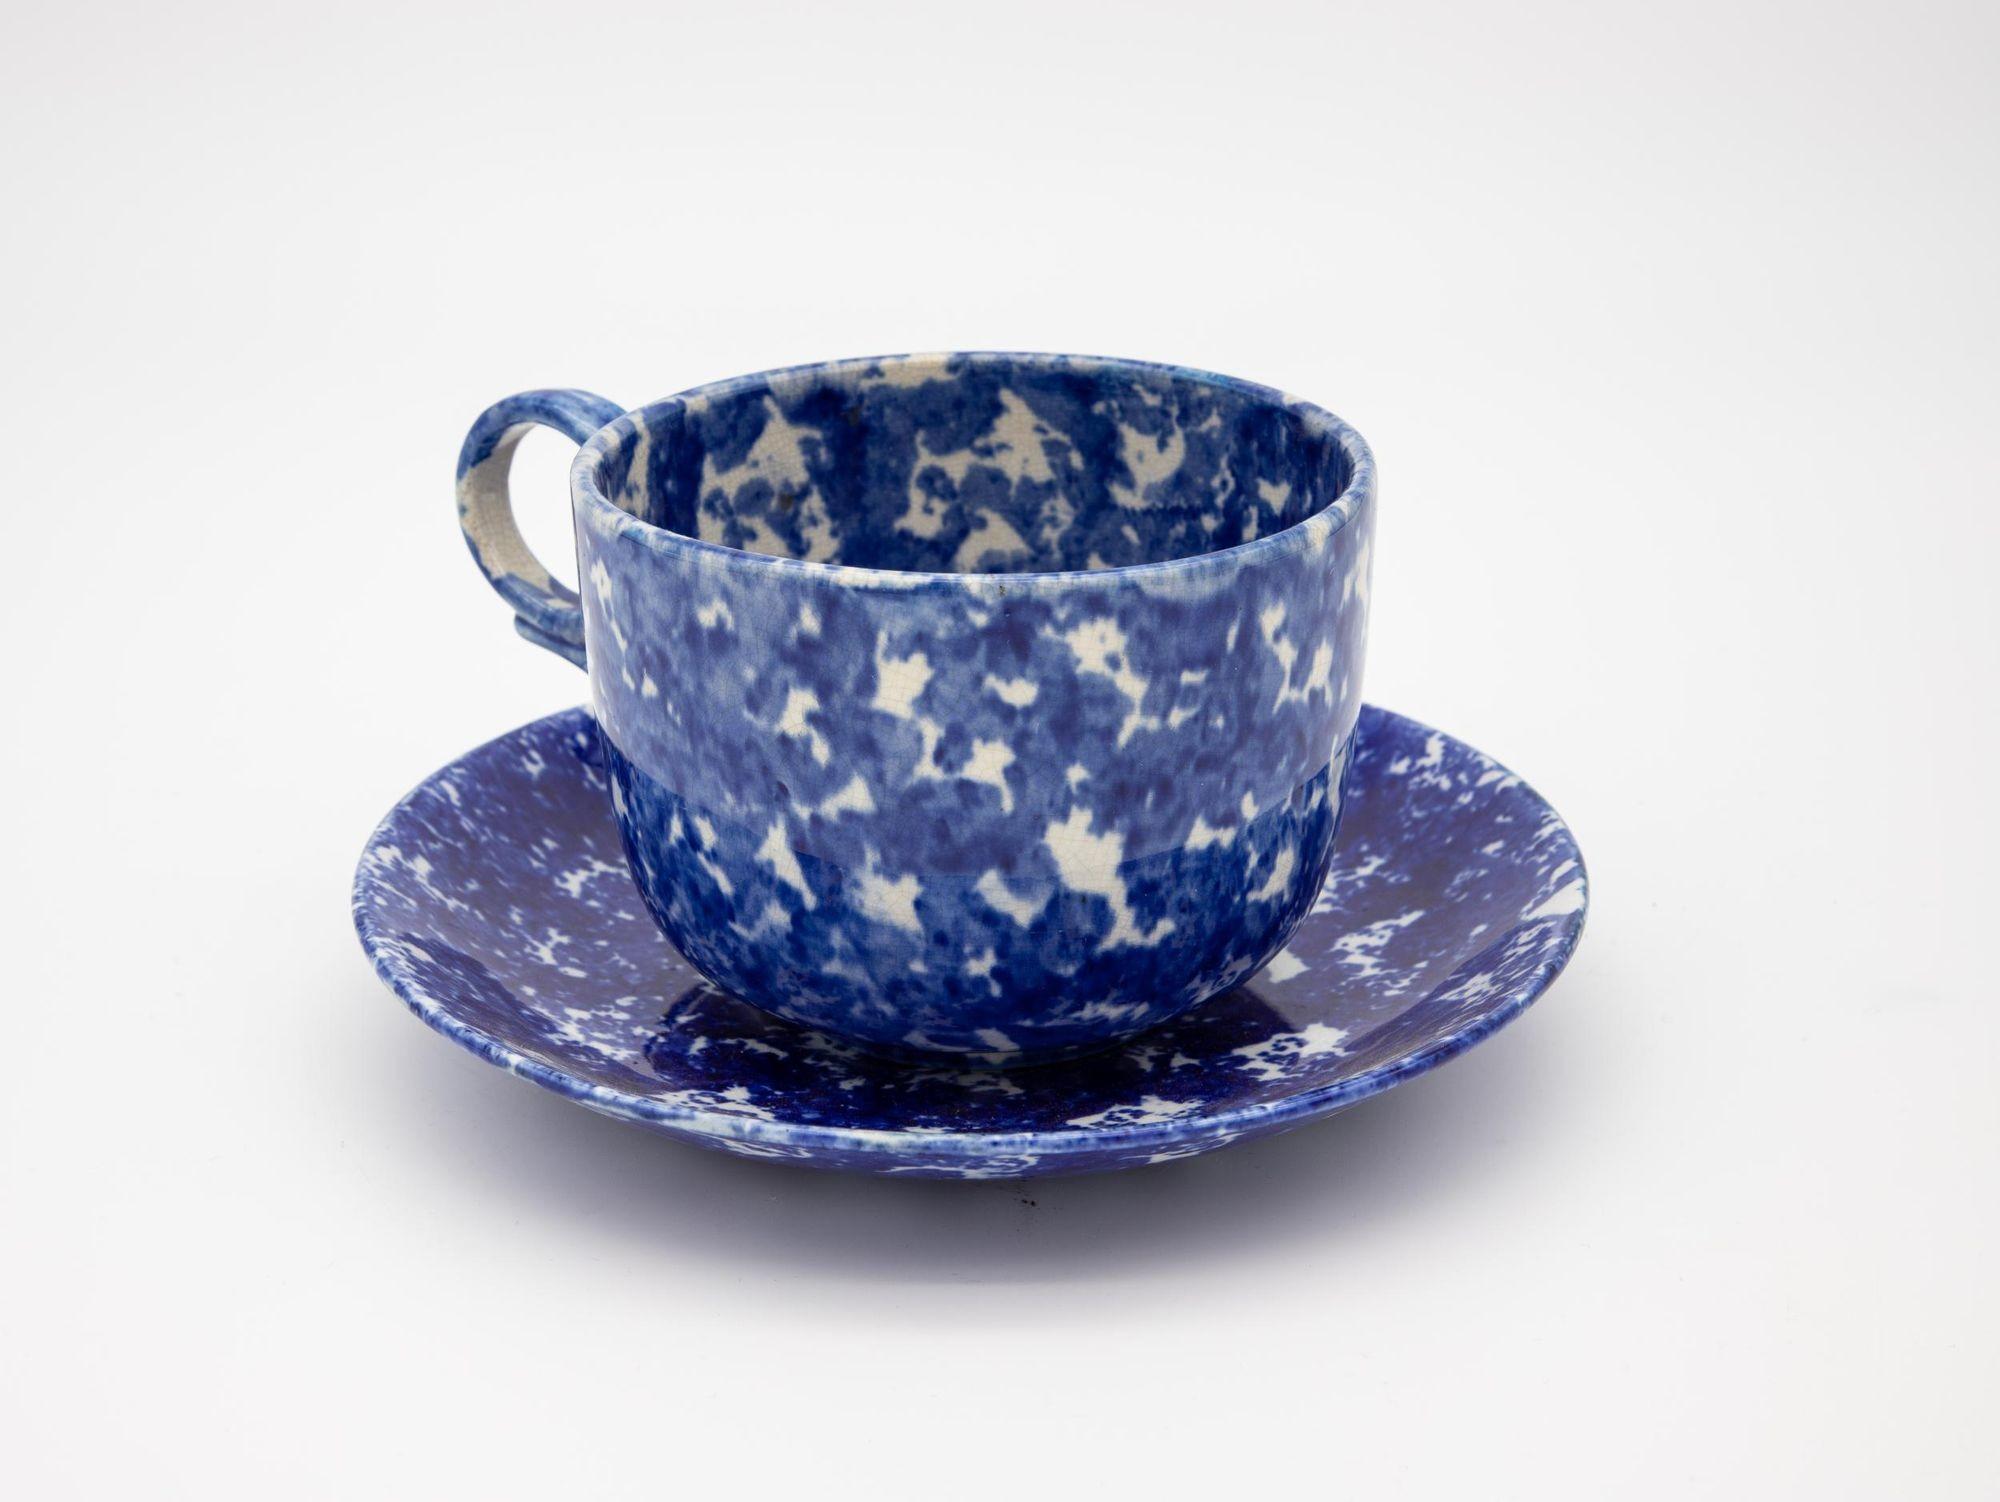 Oversized Mug & Saucer blue & white Splatterware. American mid 20th century. Measures: 7